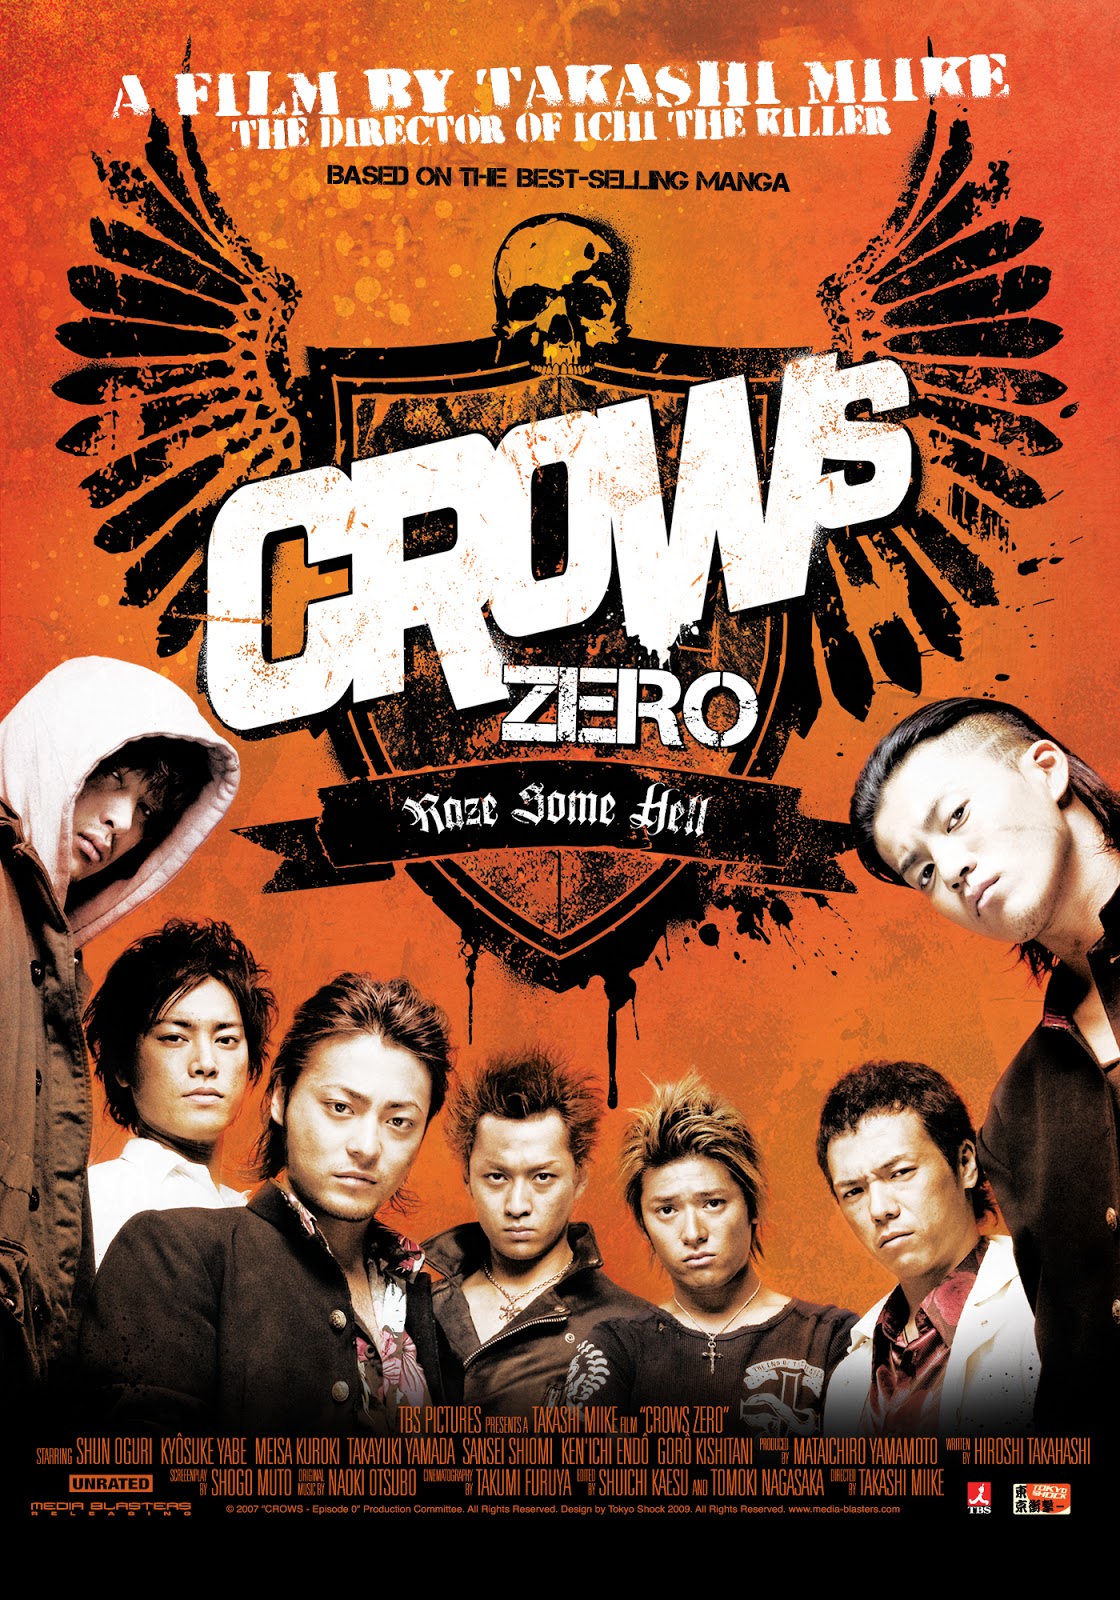 crows zero 3 free download movie